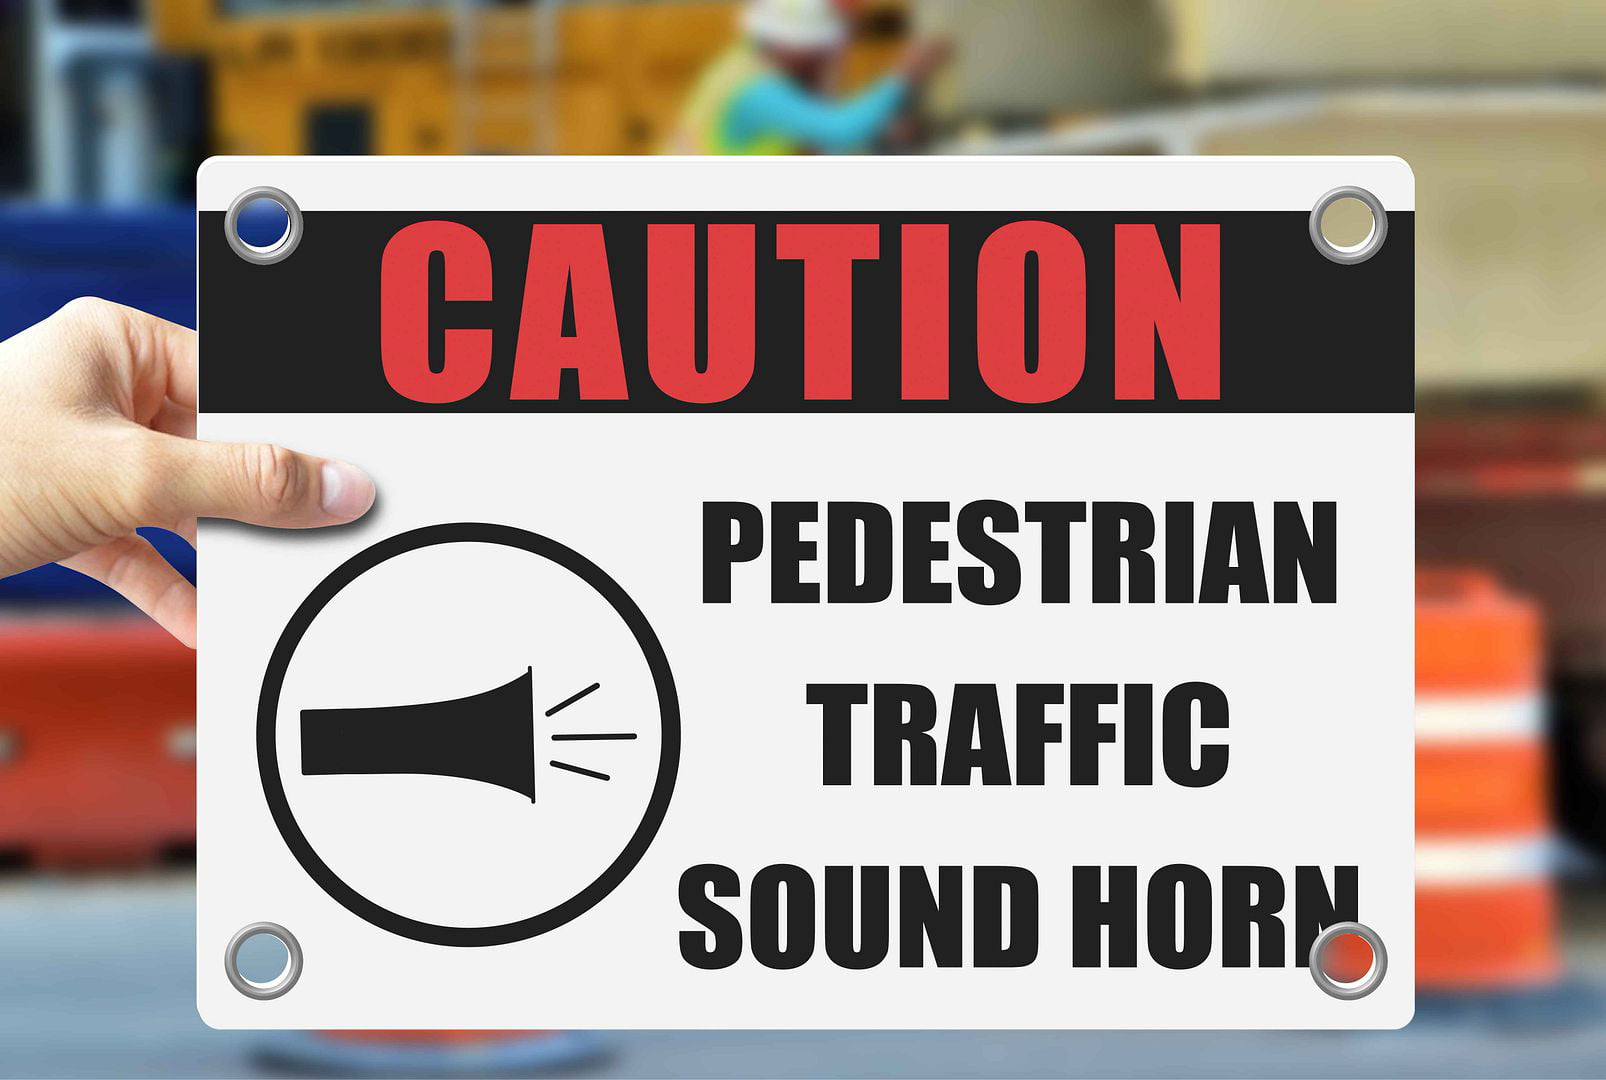 Sound horn sign Caution pedestrians 